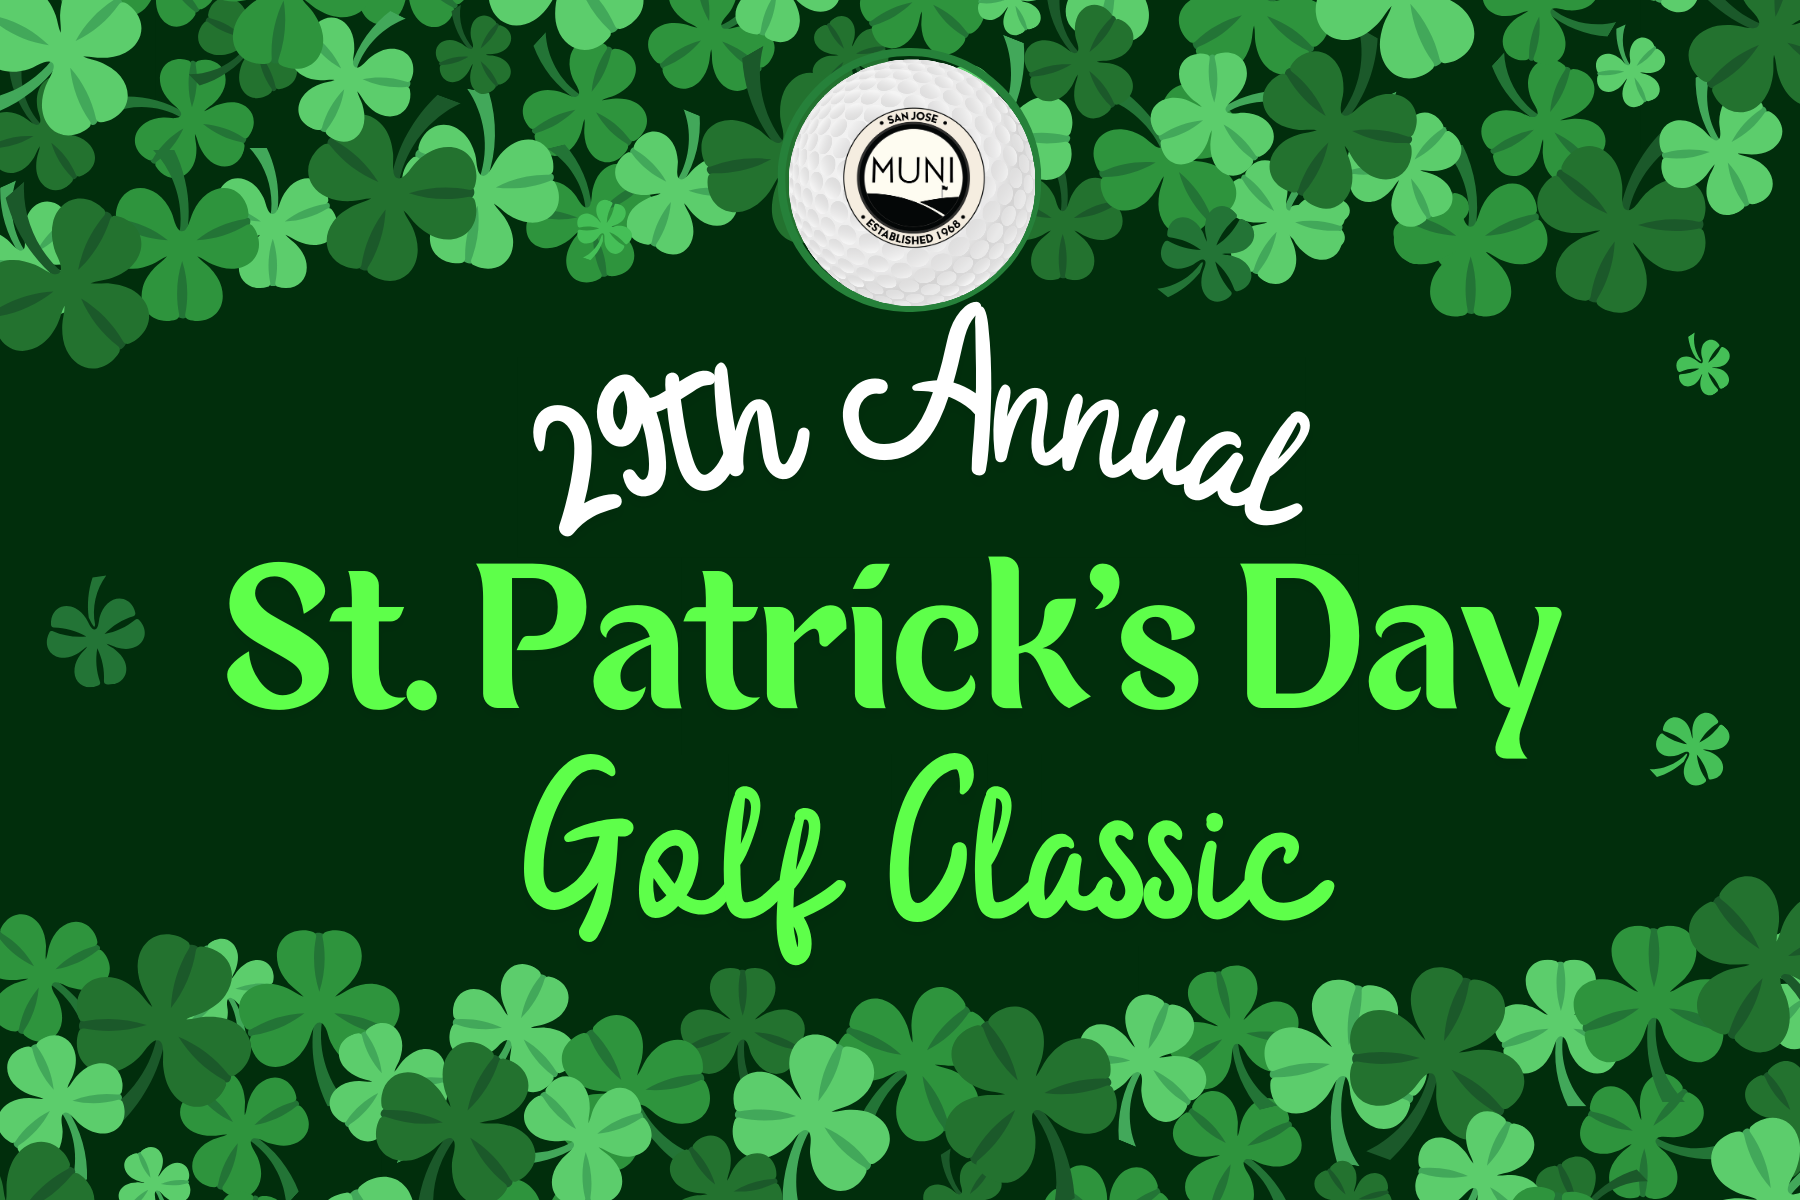 Muni St. Patricks Day Golf Classic Email Header 6 x 4 in